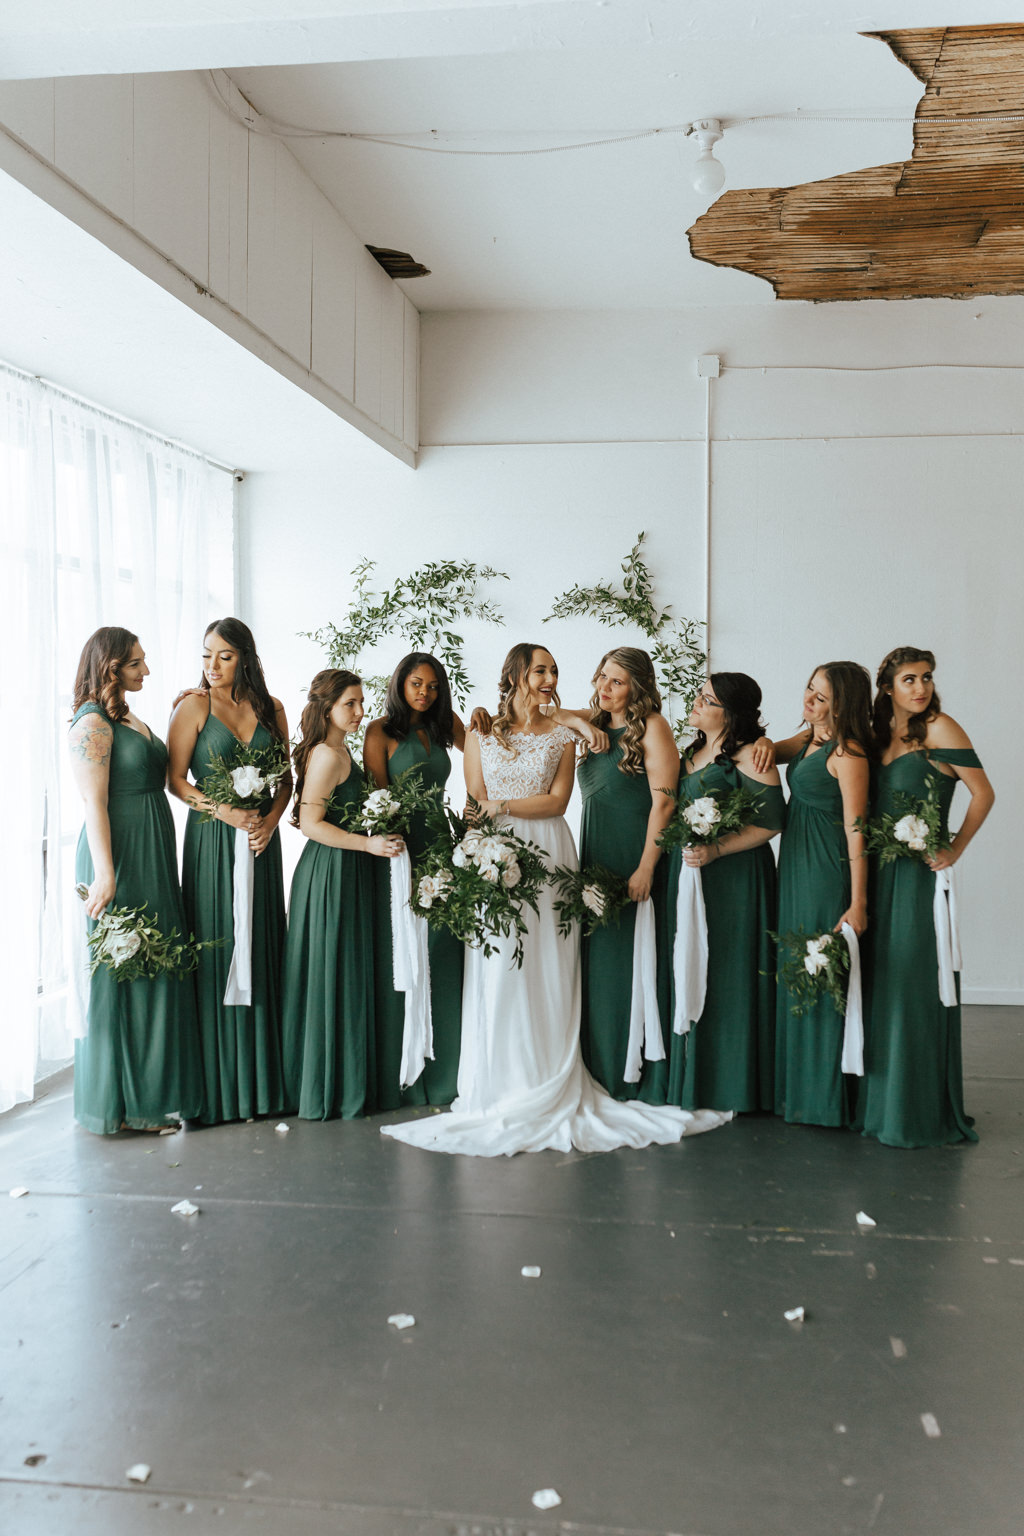 Florida Bride and Bridesmaids Wedding Portrait, Bridesmaids in Green Mismatched Style Dresses | Lakeland Wedding Venue HAUS 820